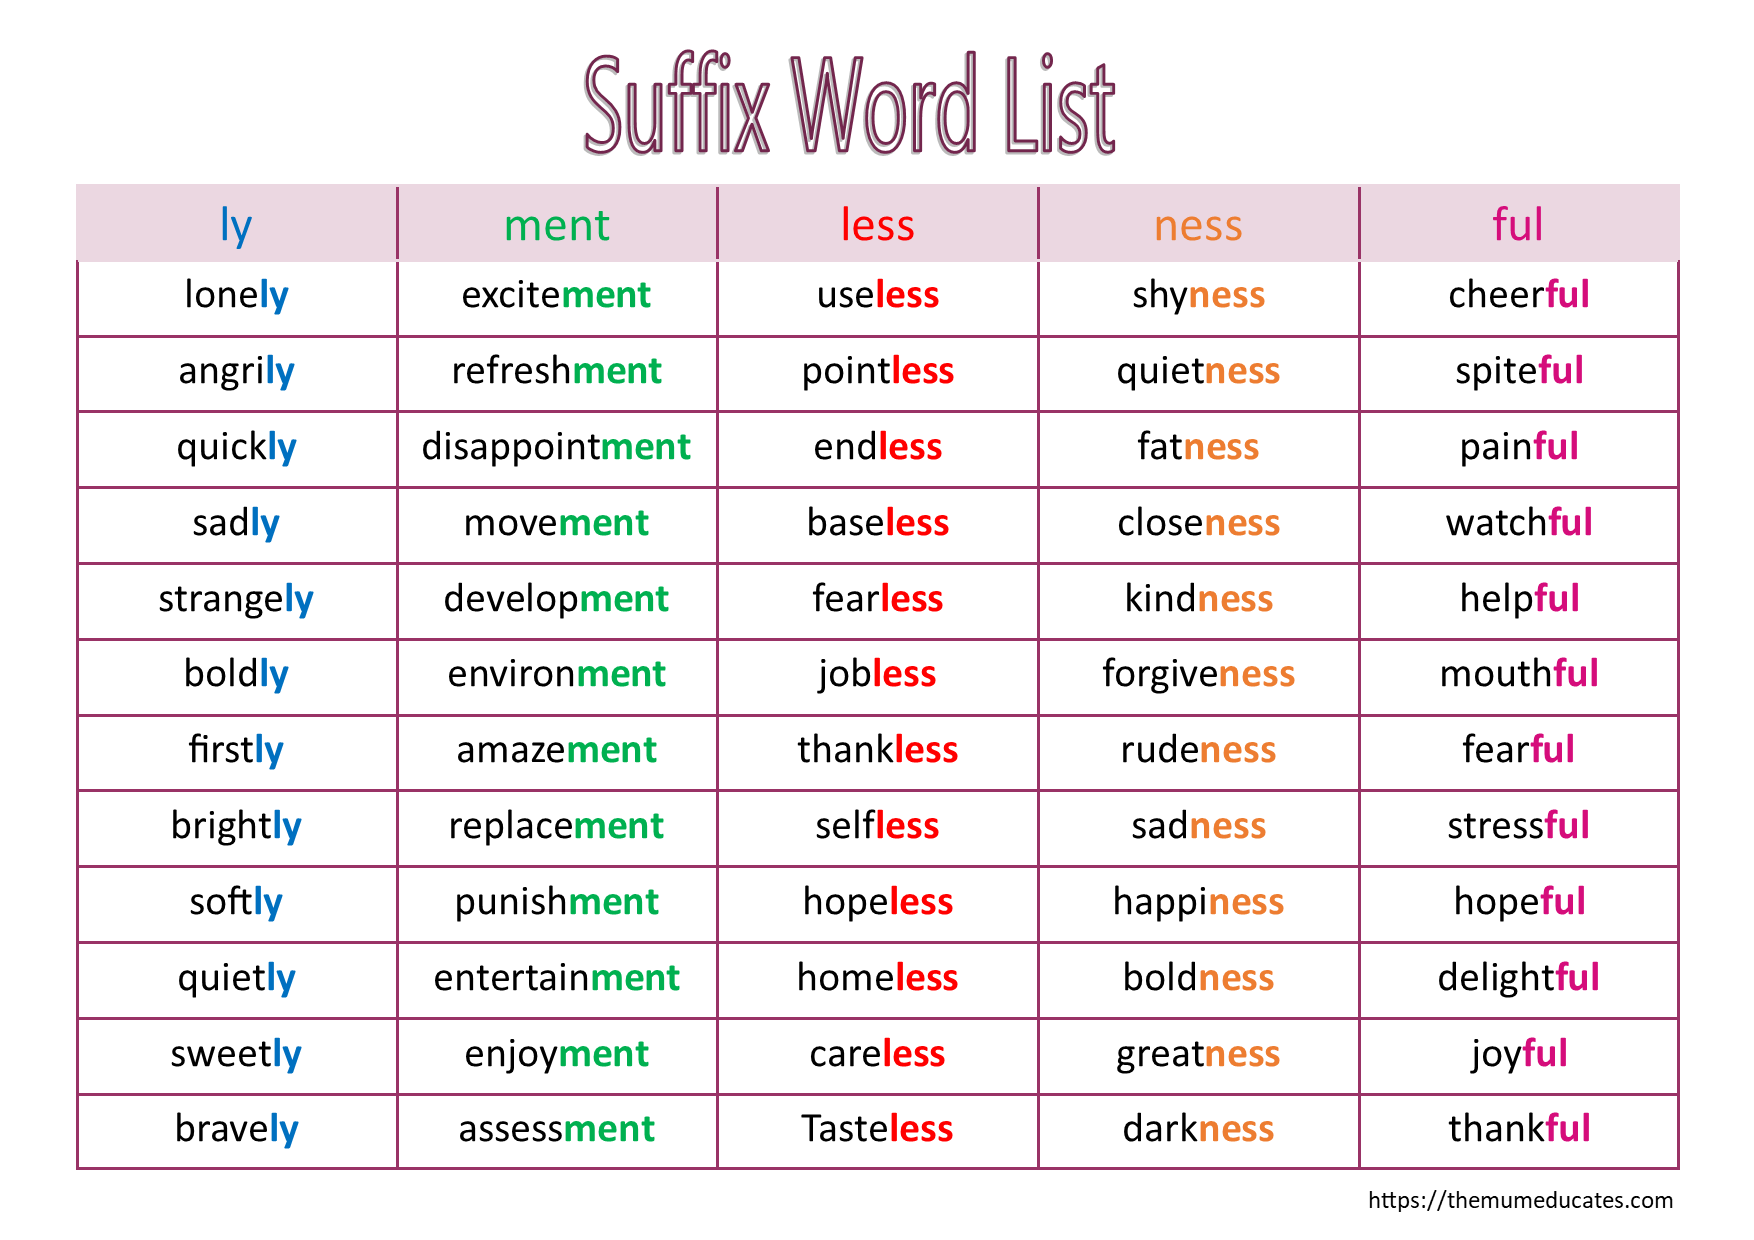 Difficult глагол. Суффикс Ness в английском языке. Суффиксы и окончания в английском языке. Суффиксы Ness ment в английском языке. Word formation суффиксы prefixes.